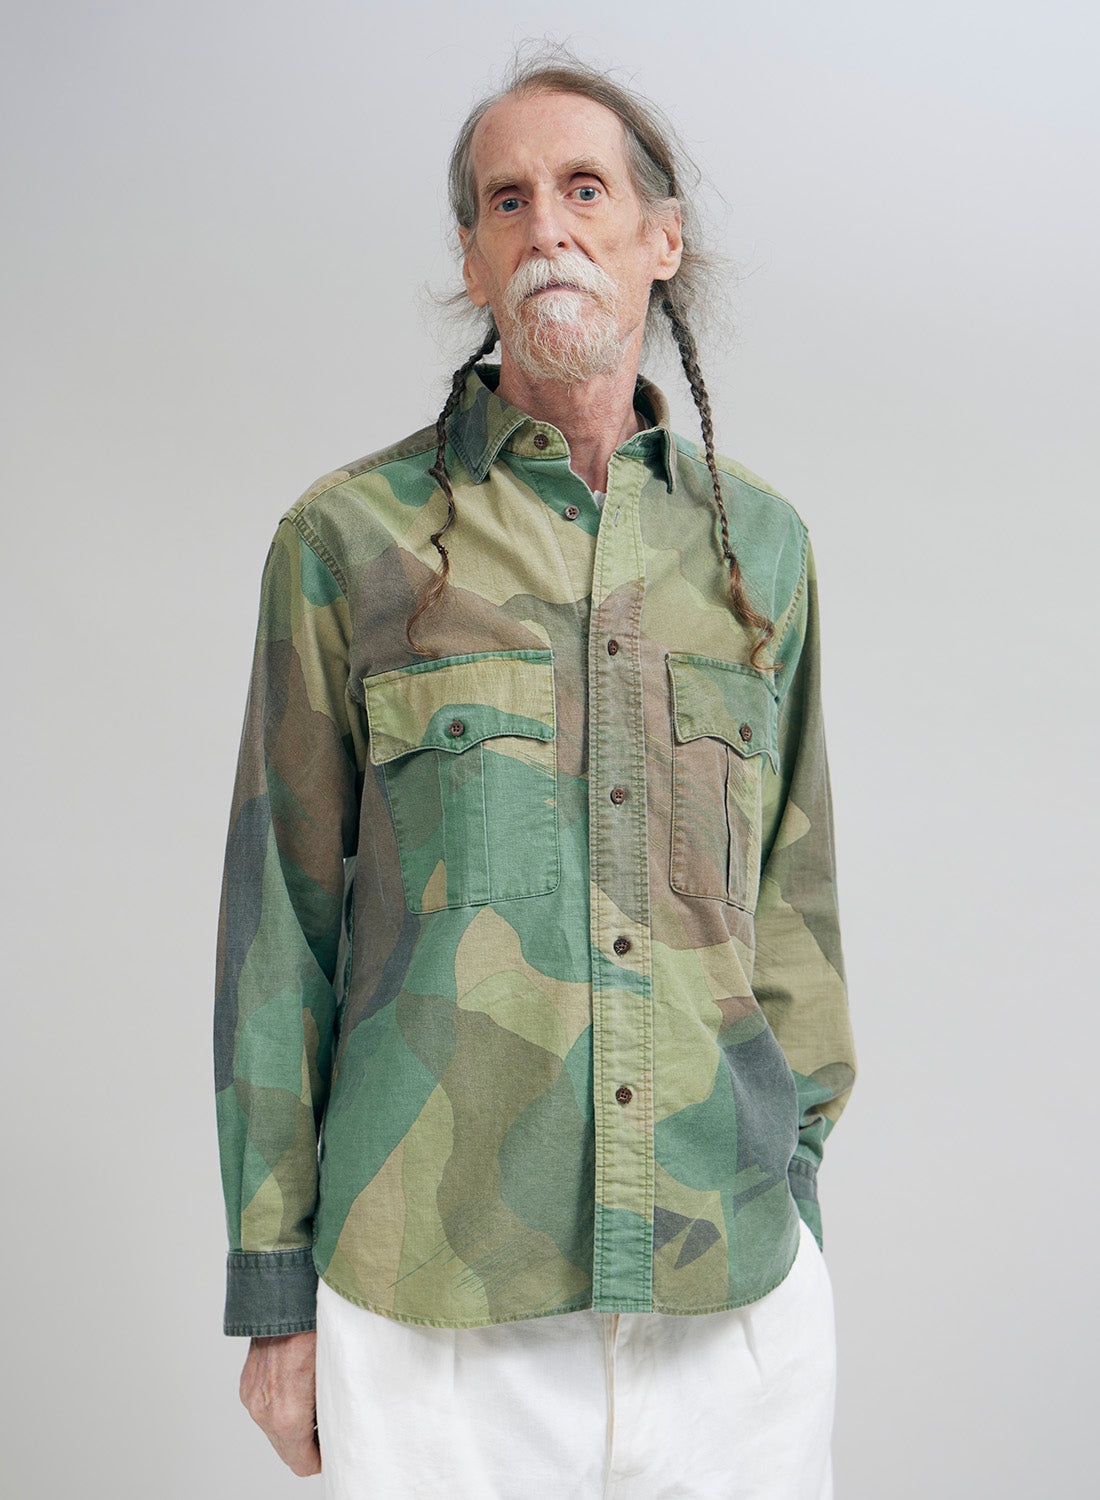 Army Shirt Fade Cloth in Green Camo - 2